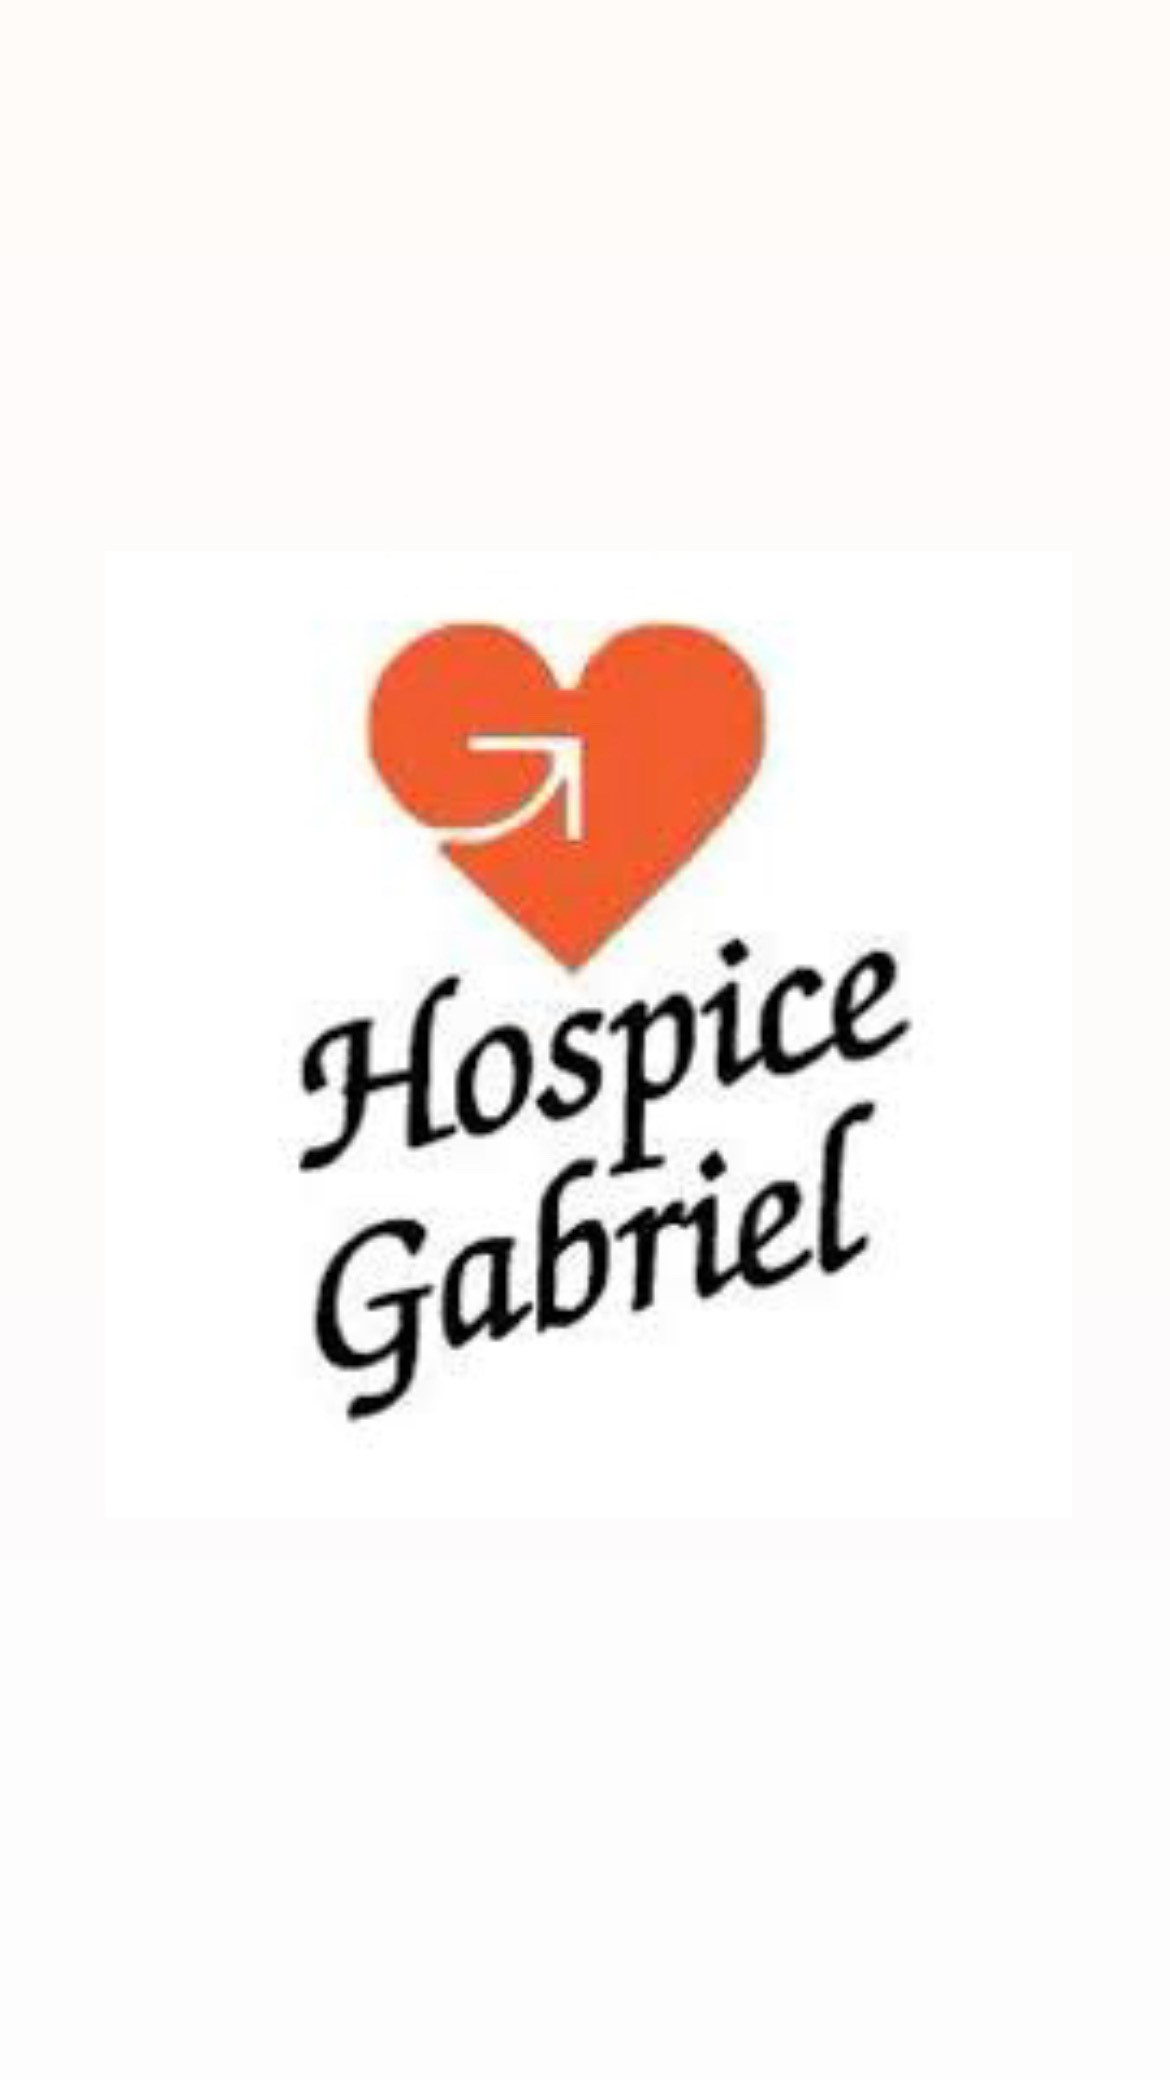 Hospice Gabriel Golfen